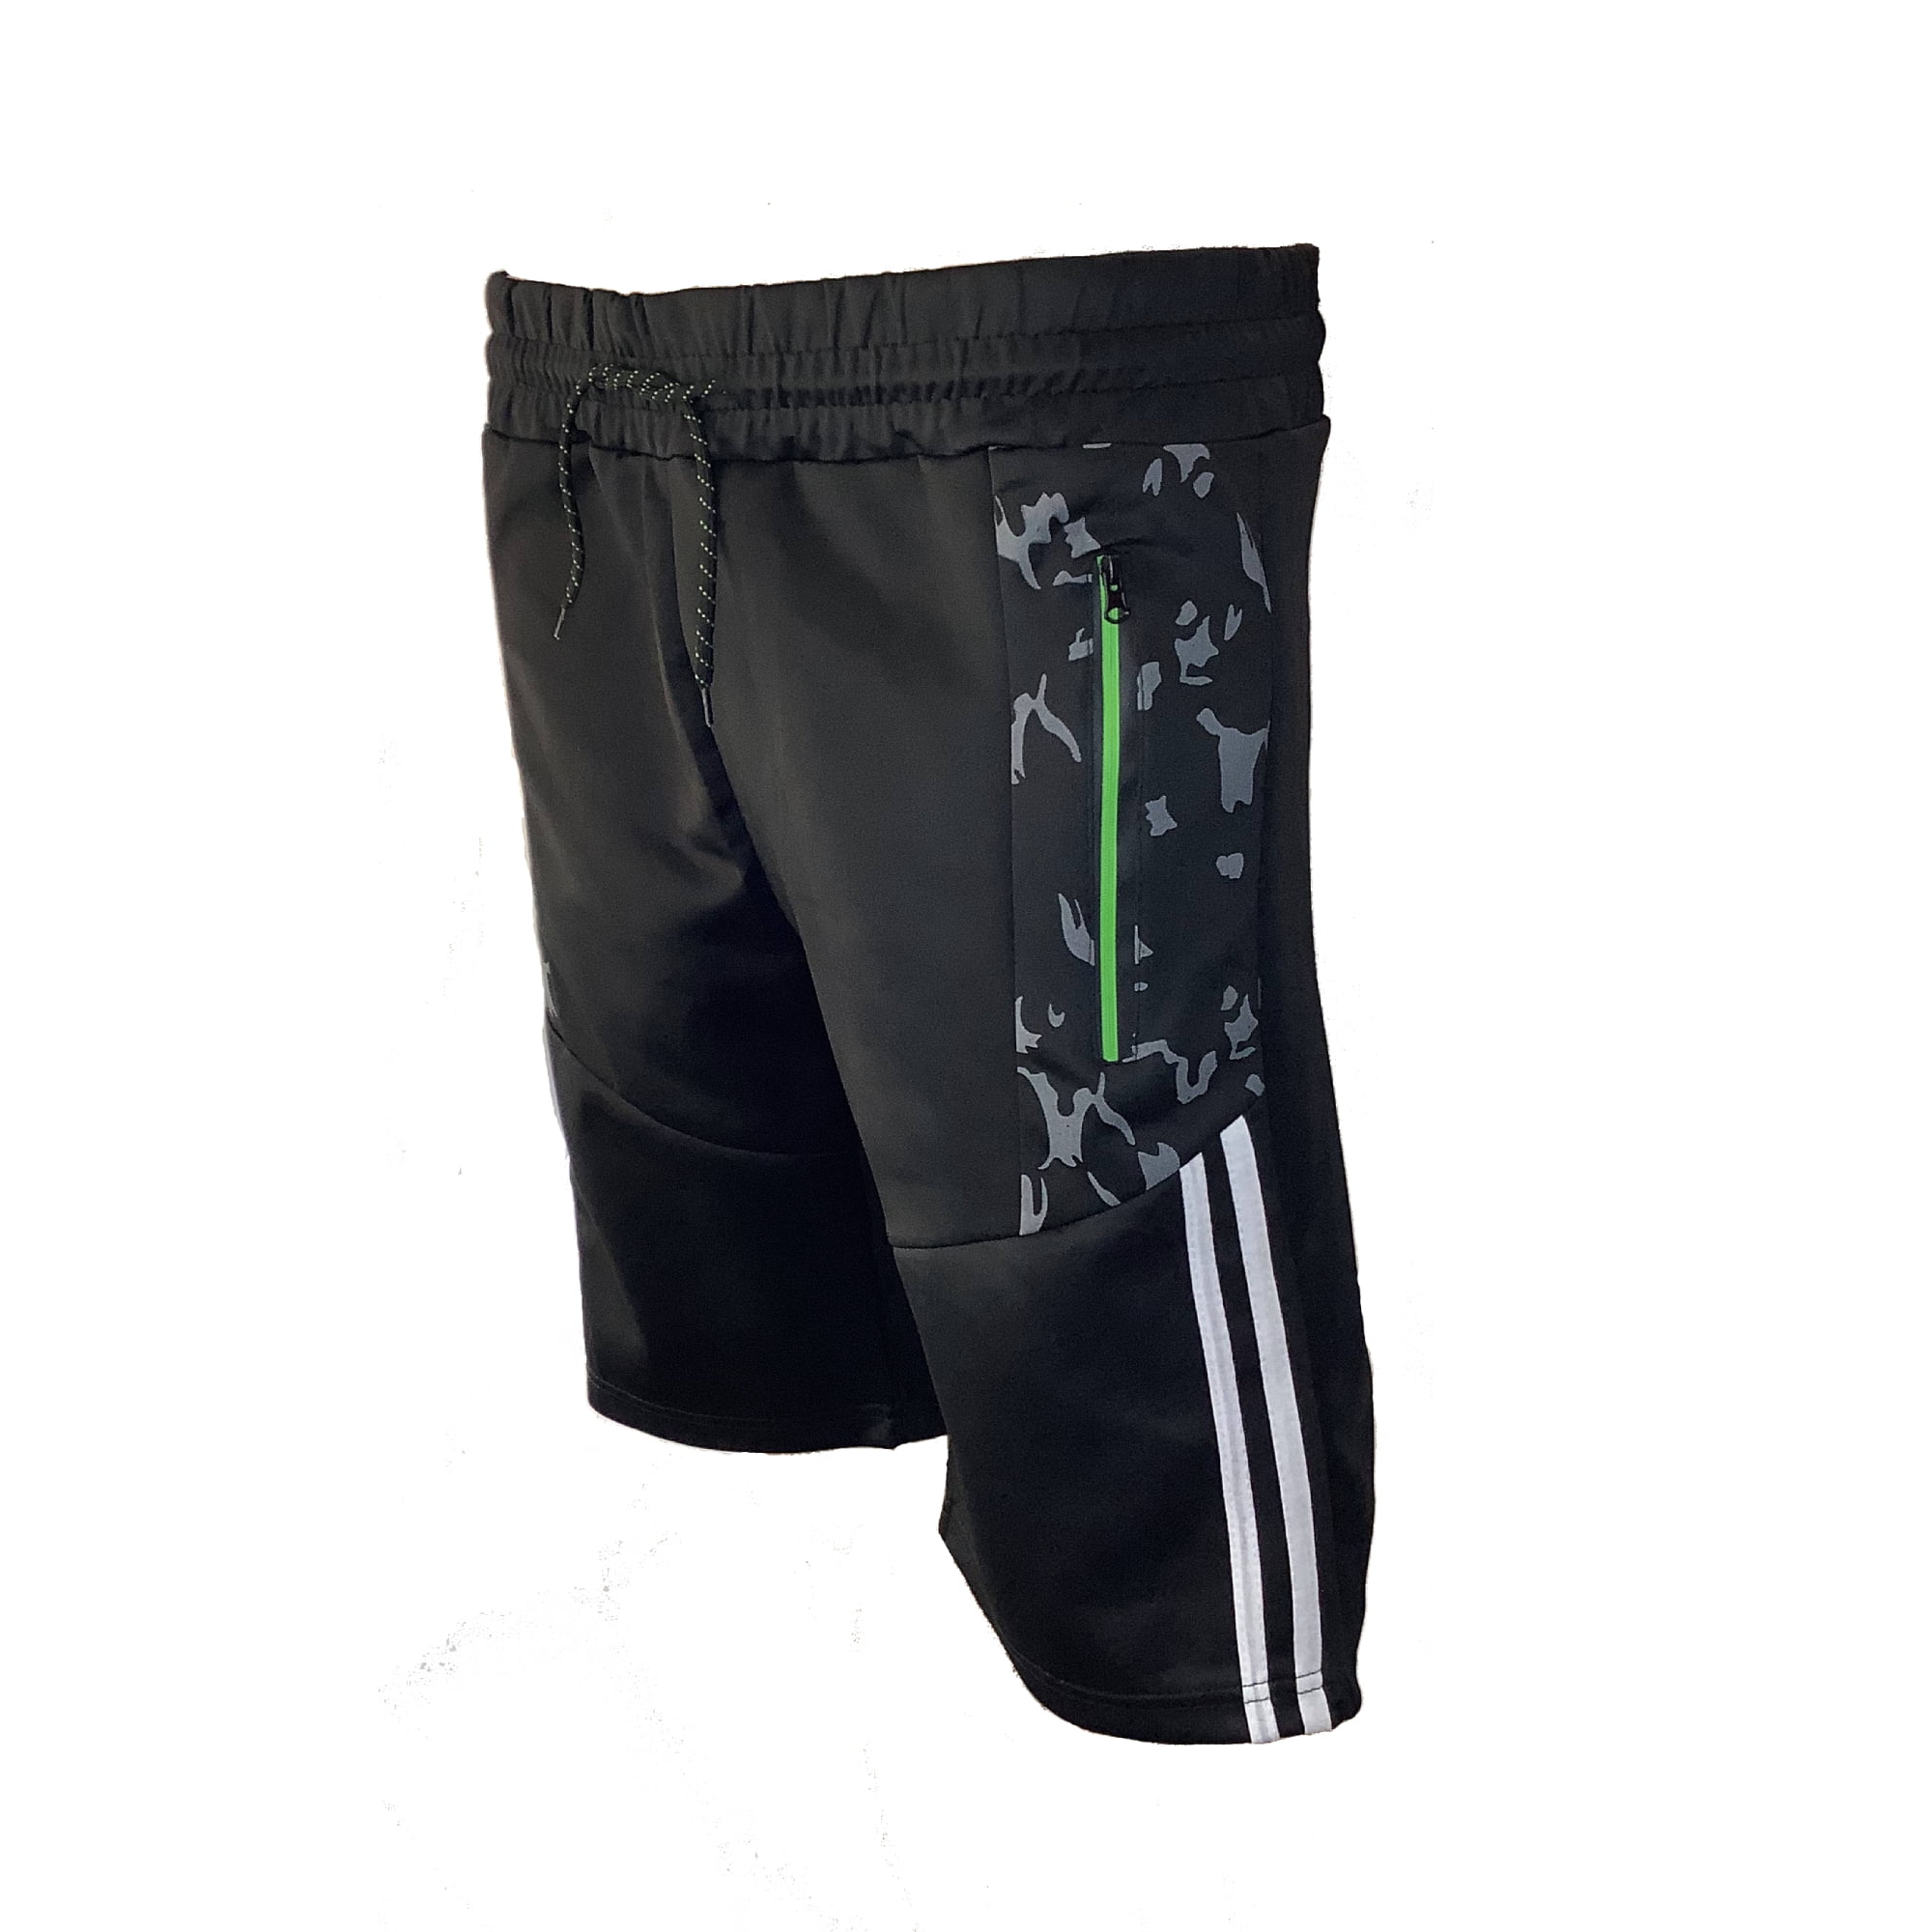 Voncheer Mens Elastic Waist Drawstring Summer Workout Shorts with Zipper Pockets